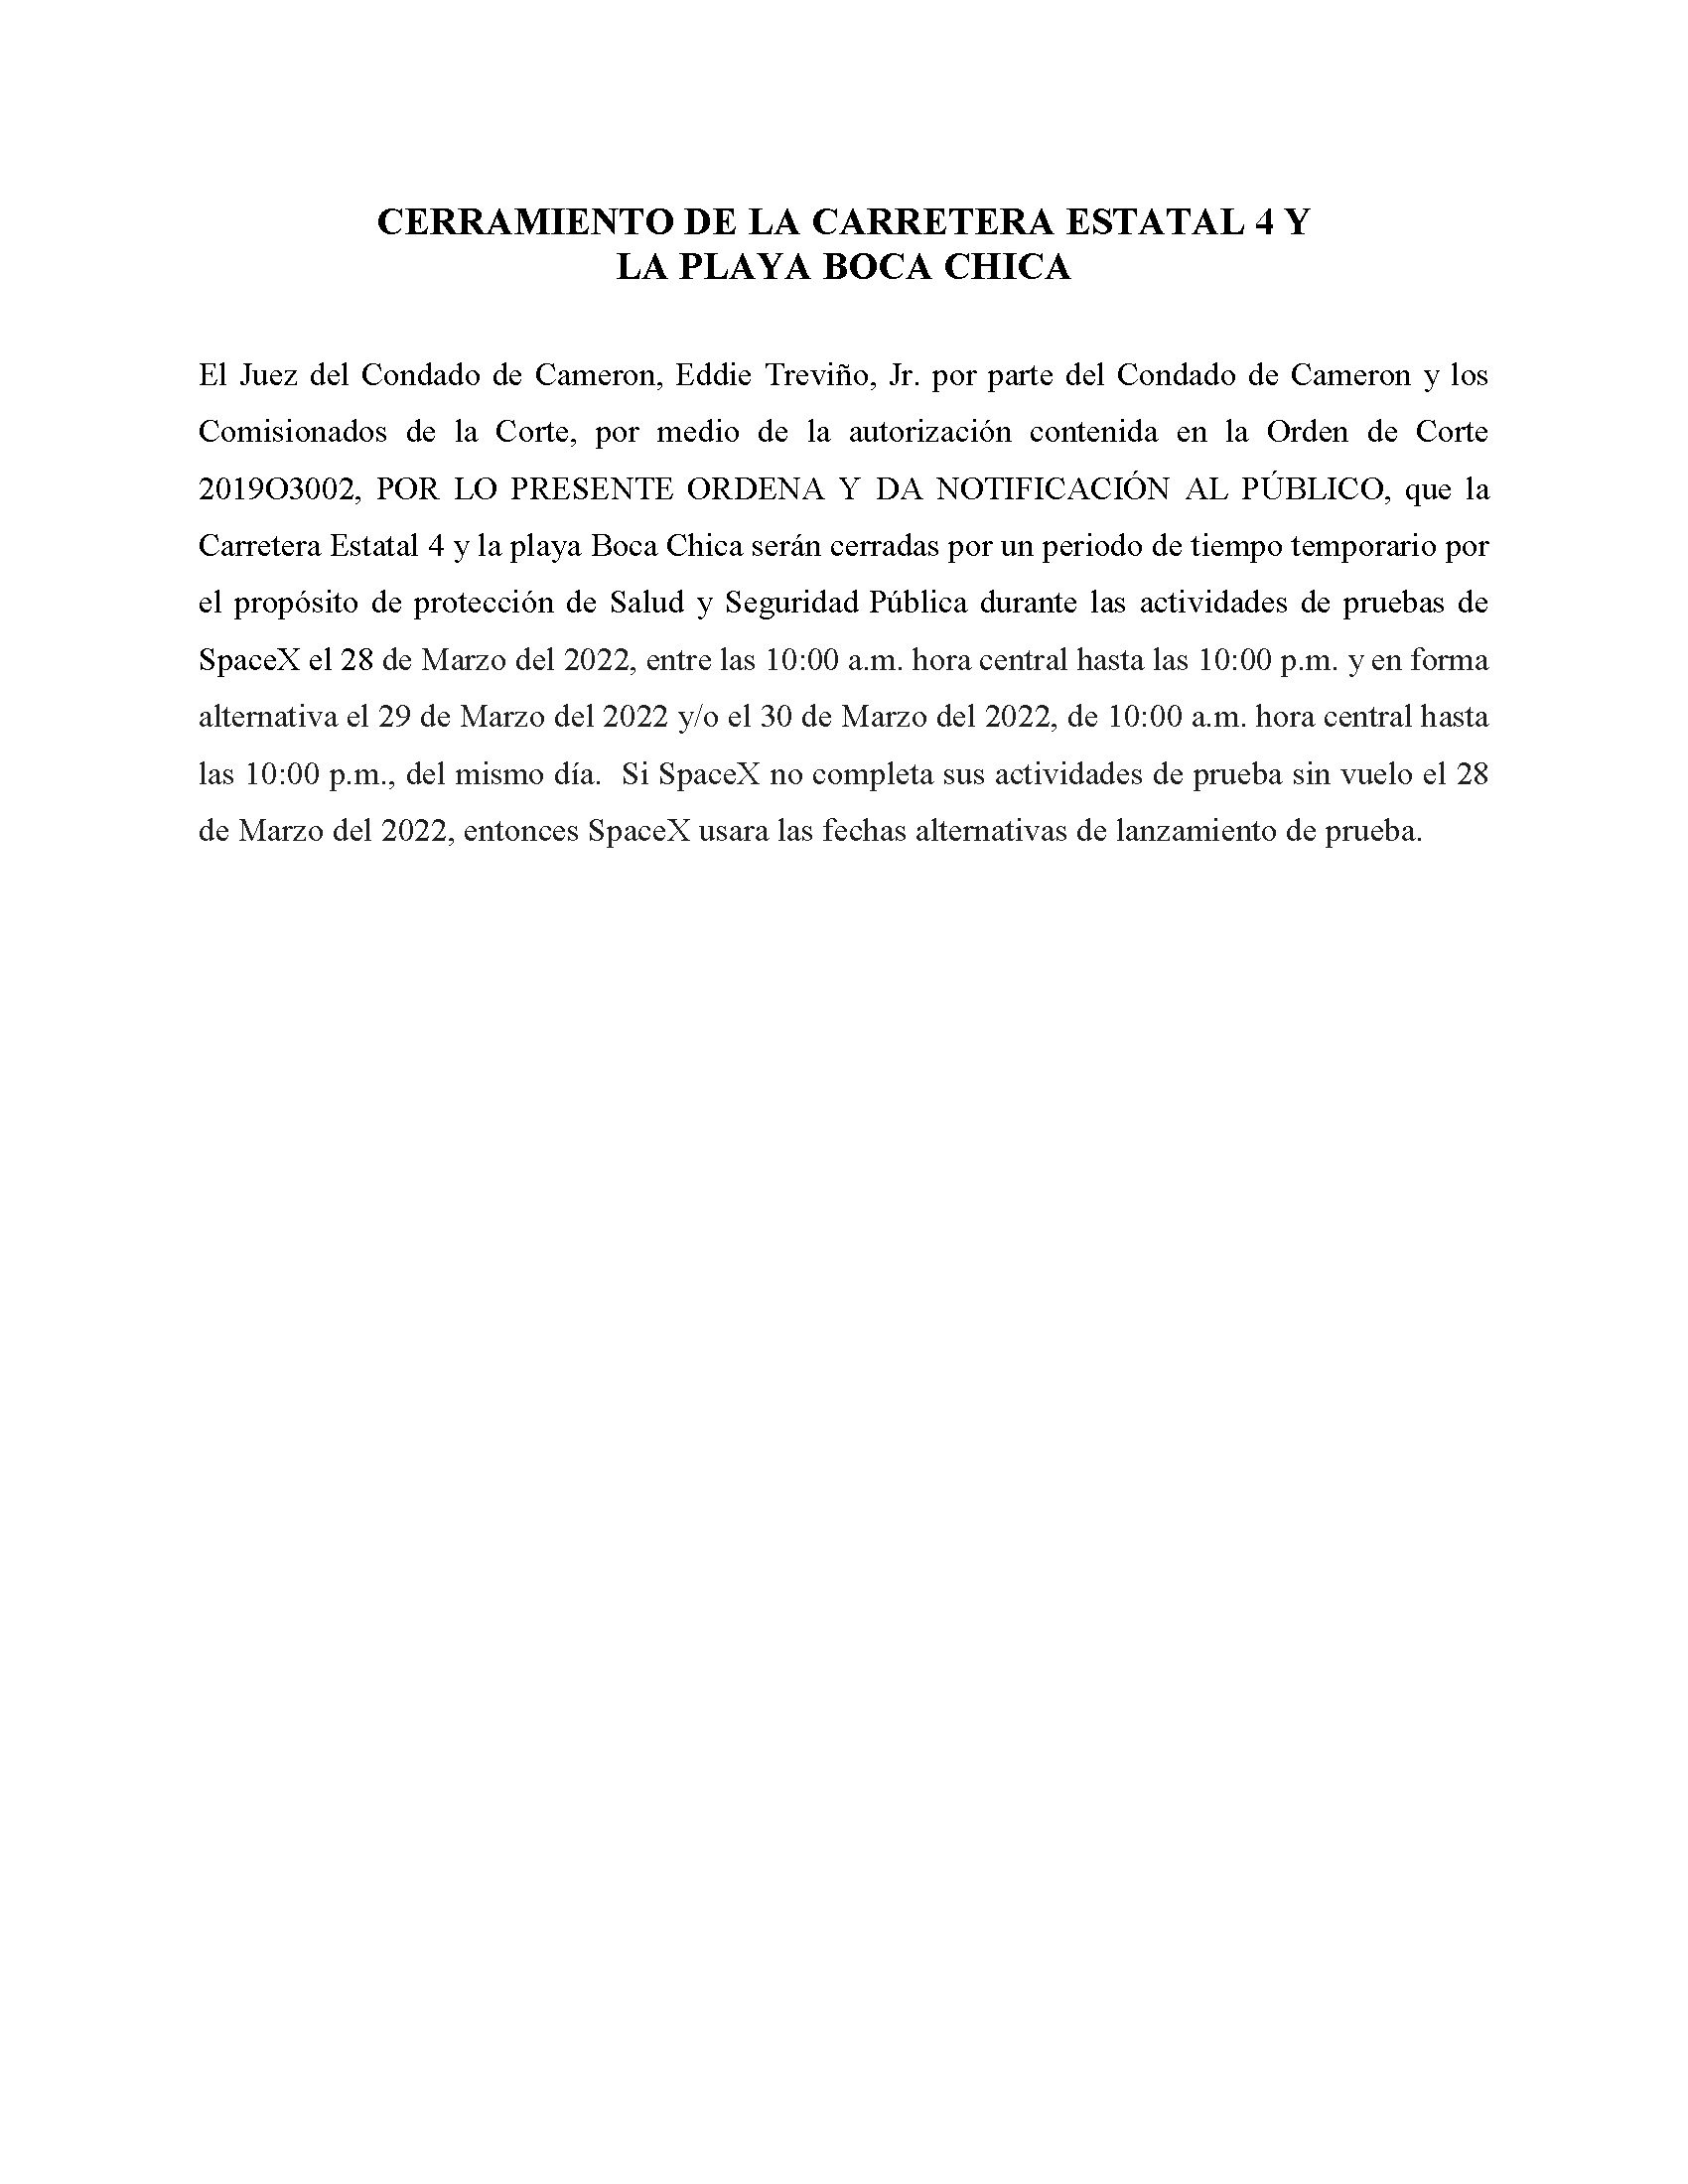 ORDER.CLOSURE OF HIGHWAY 4 Y LA PLAYA BOCA CHICA.SPANISH.03.28.2022